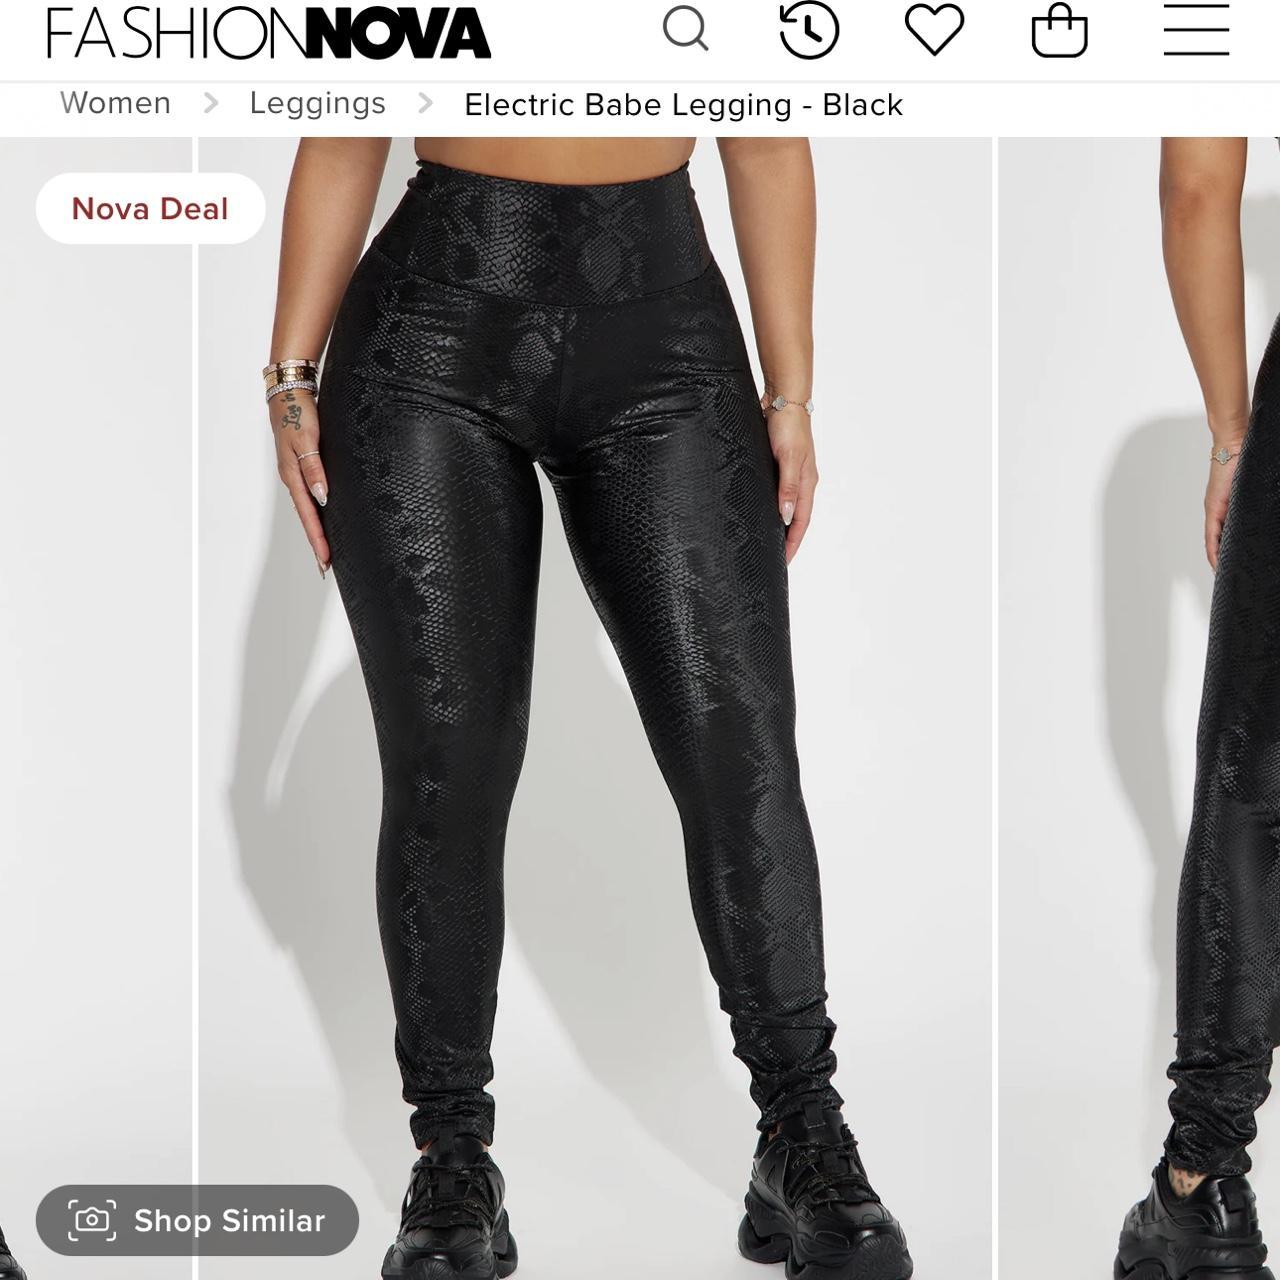 Electric Babe Legging - Black, Fashion Nova, Leggings